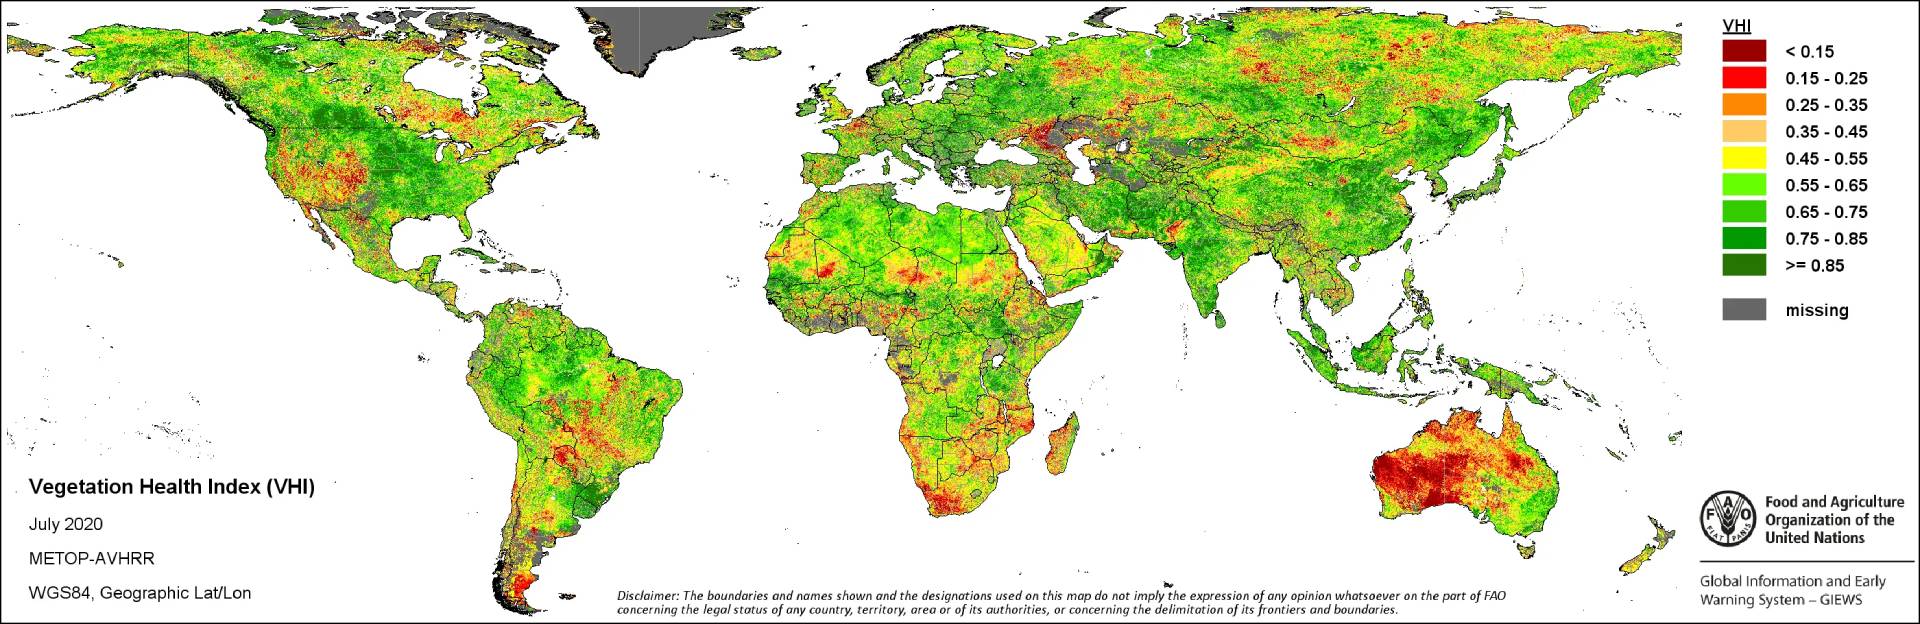 VHI (Vegetation Health Index)